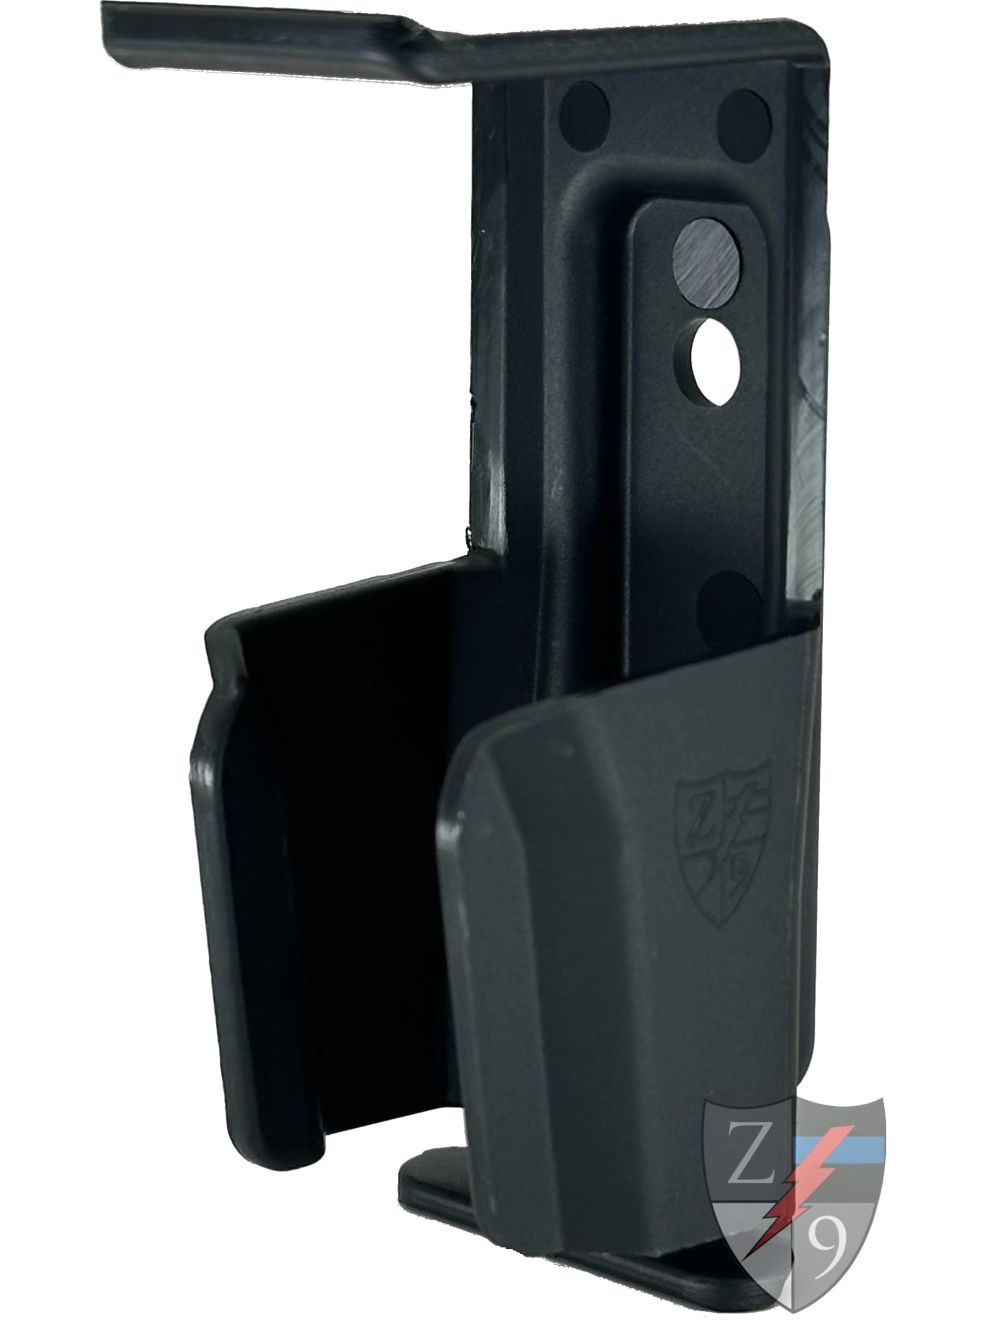 Zero9 Taser Cartridge Case / Taser 7 Cartridge